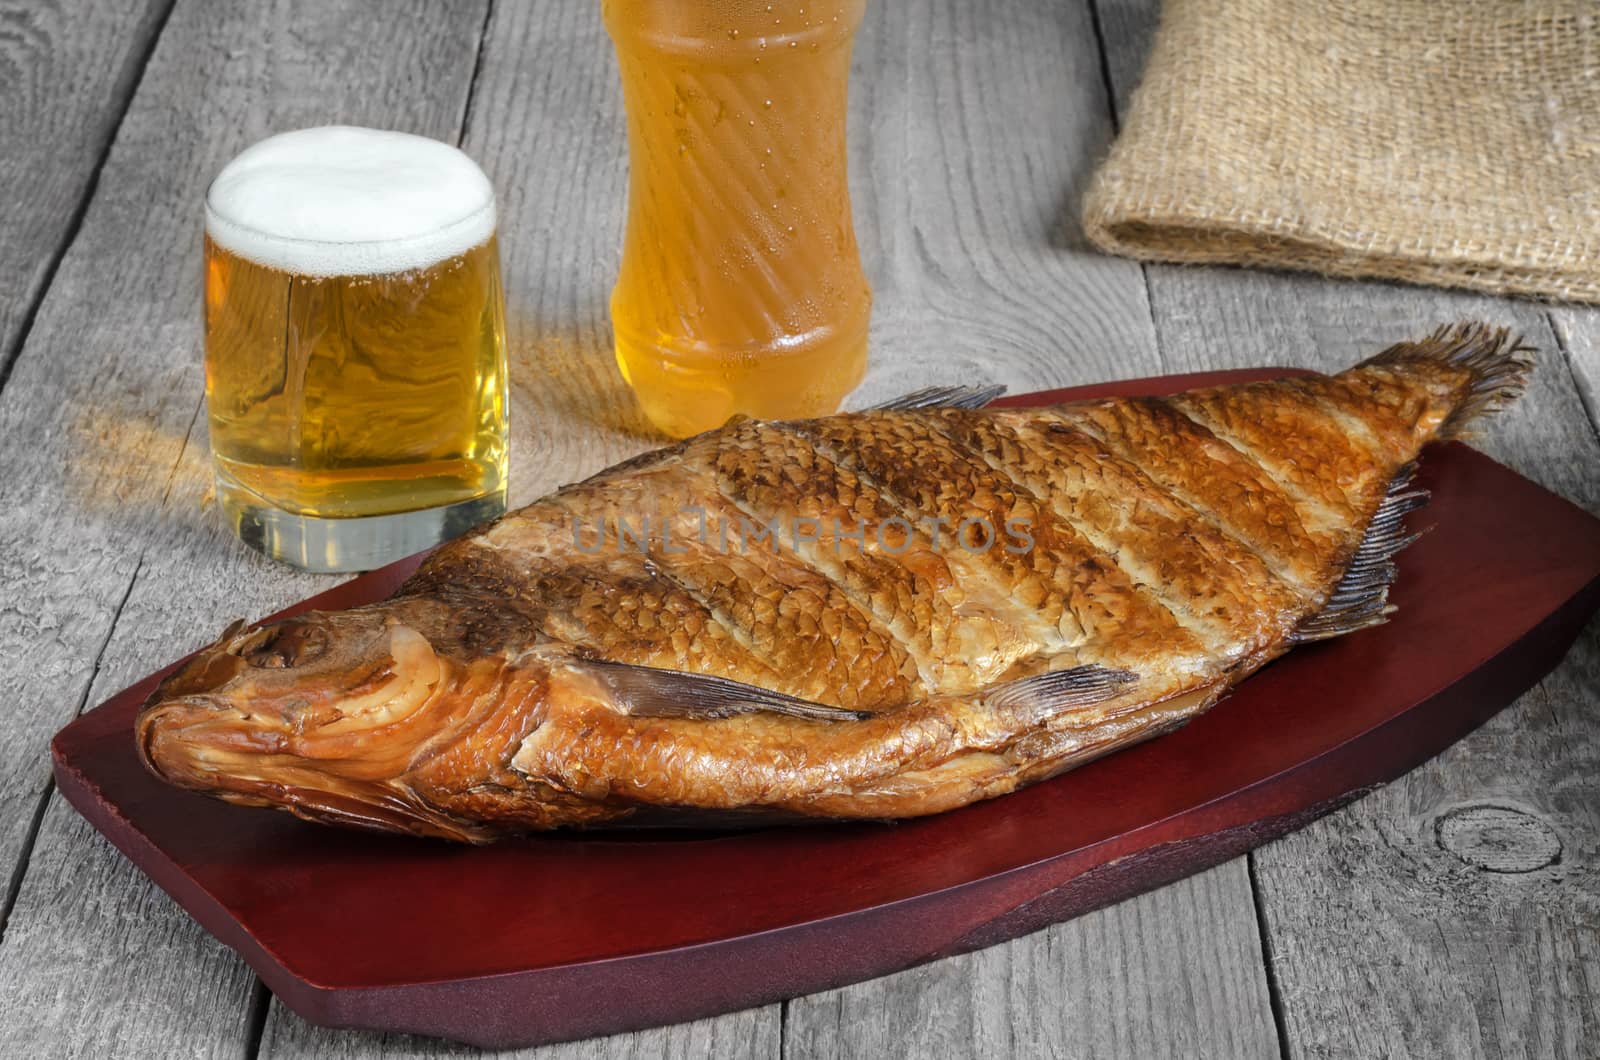 Hot smoked fish and beer by Gaina